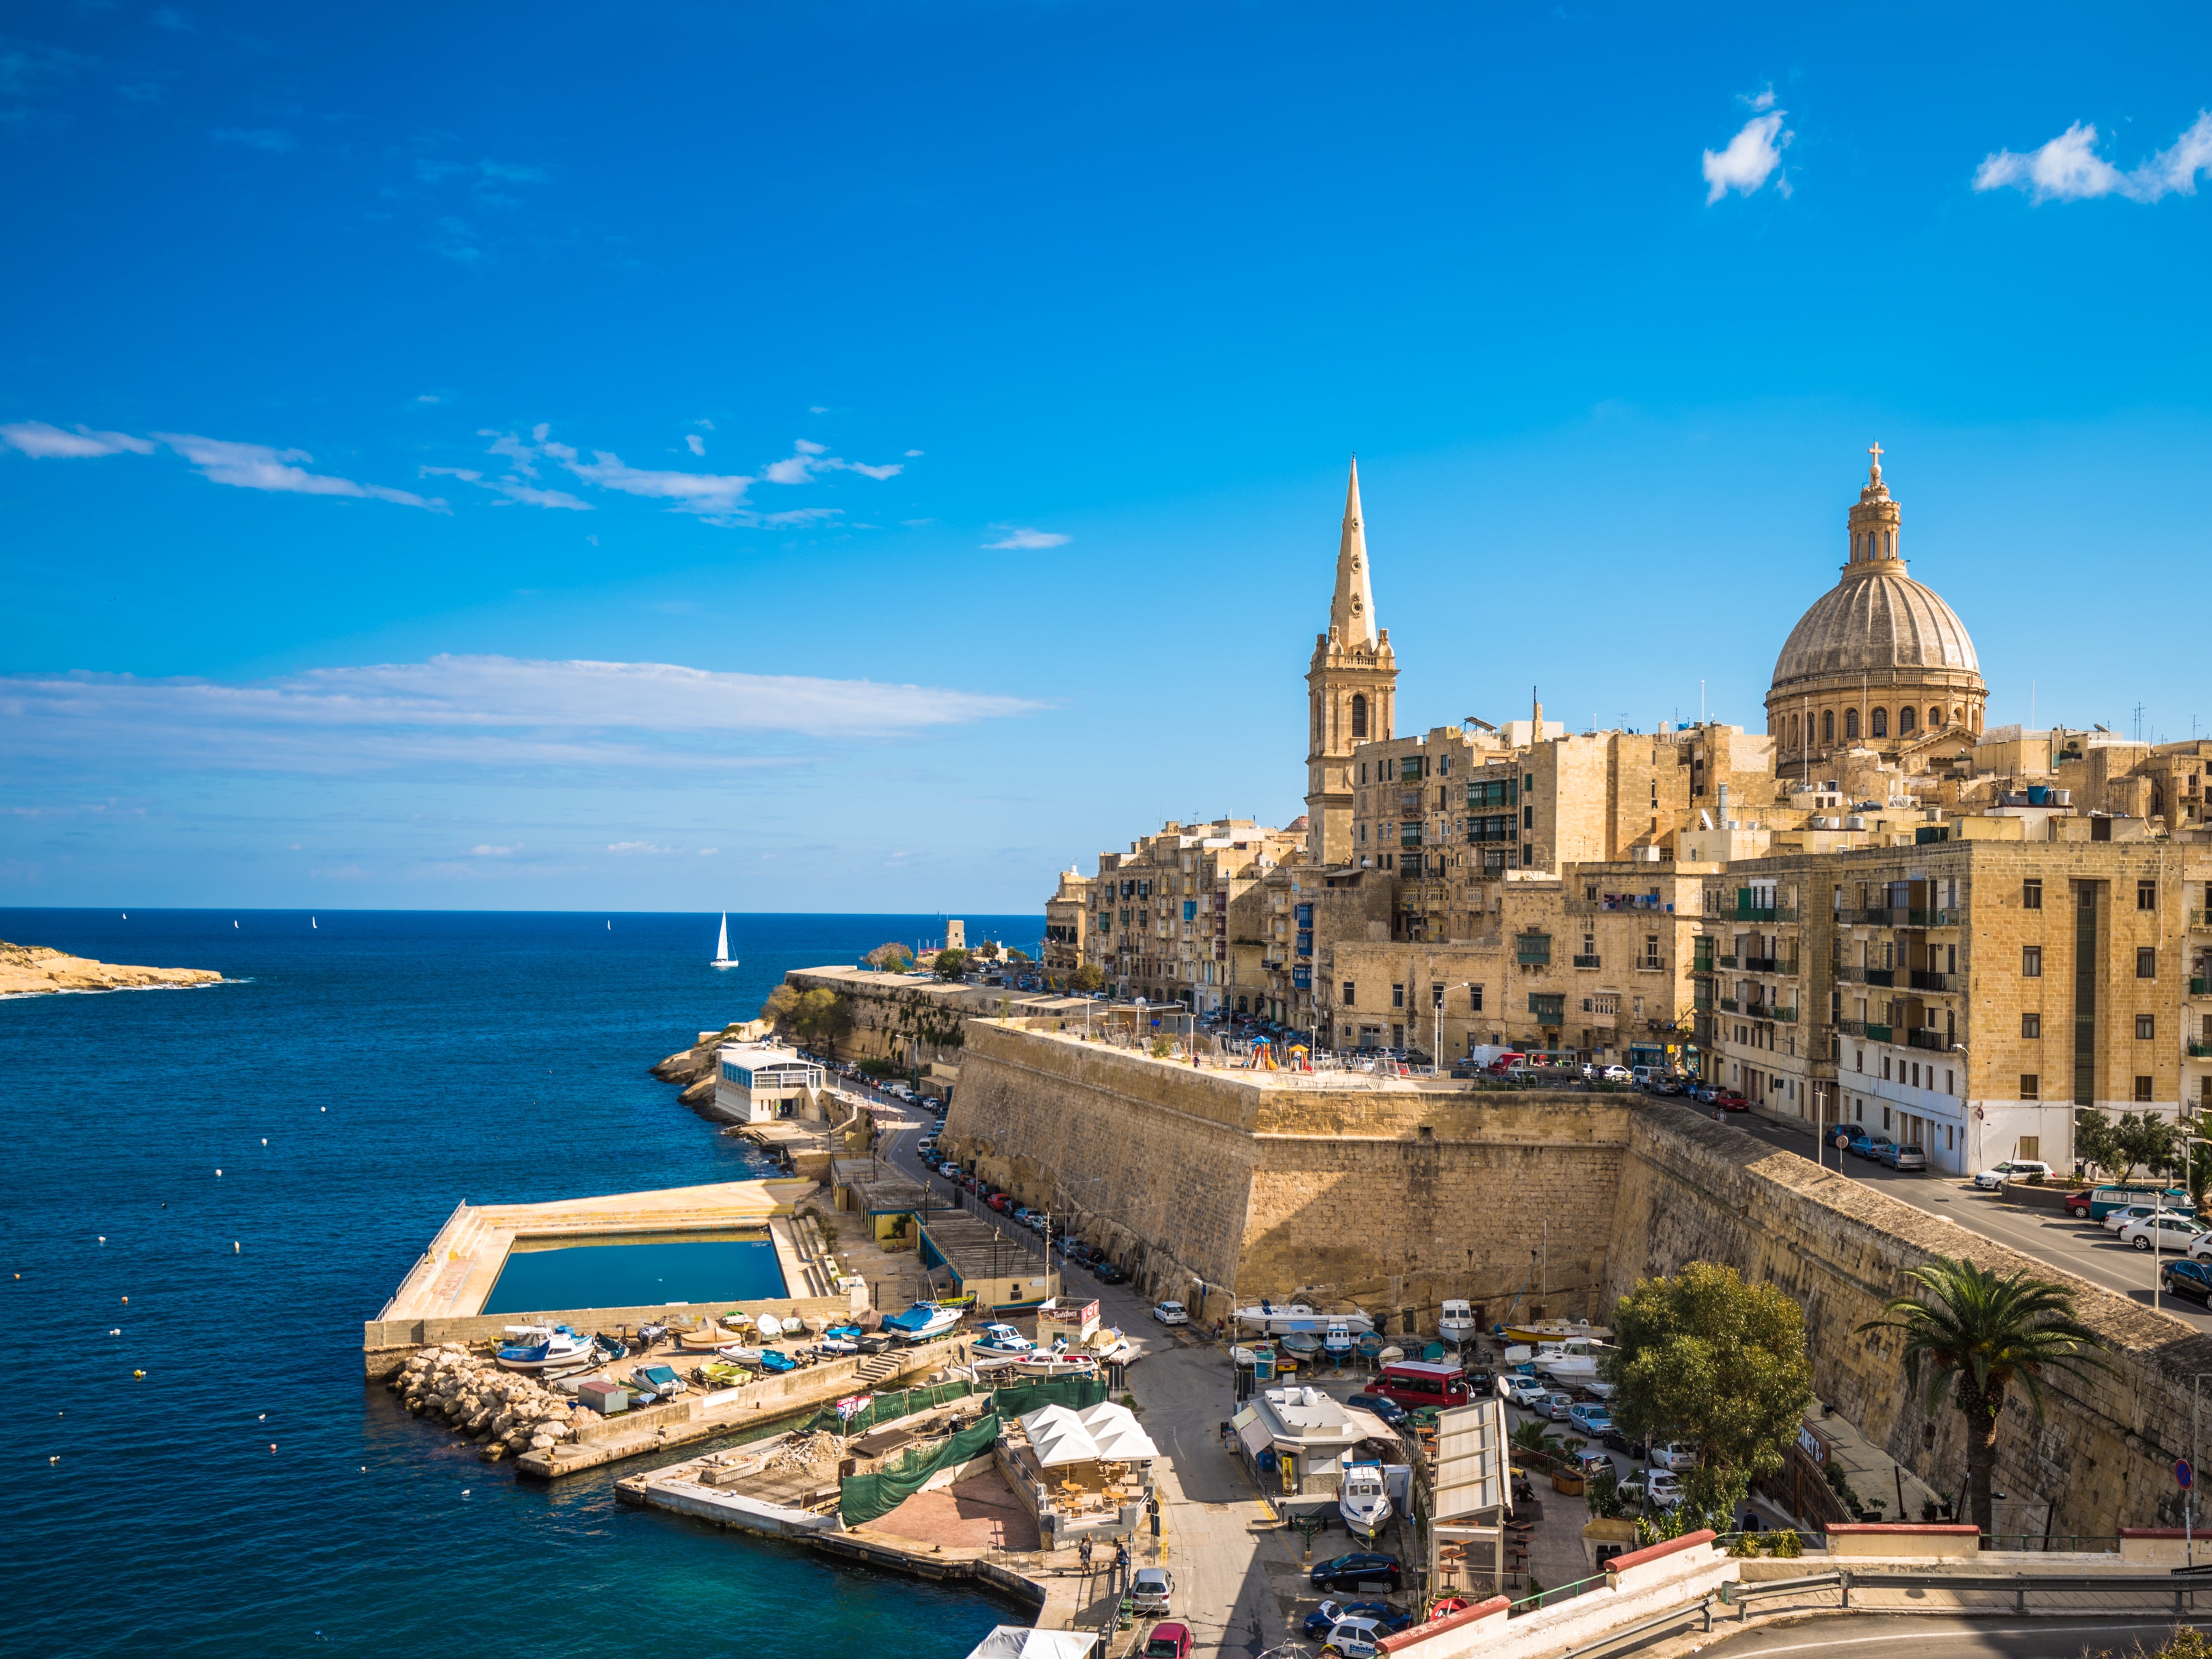 The Maltese capital of Valletta